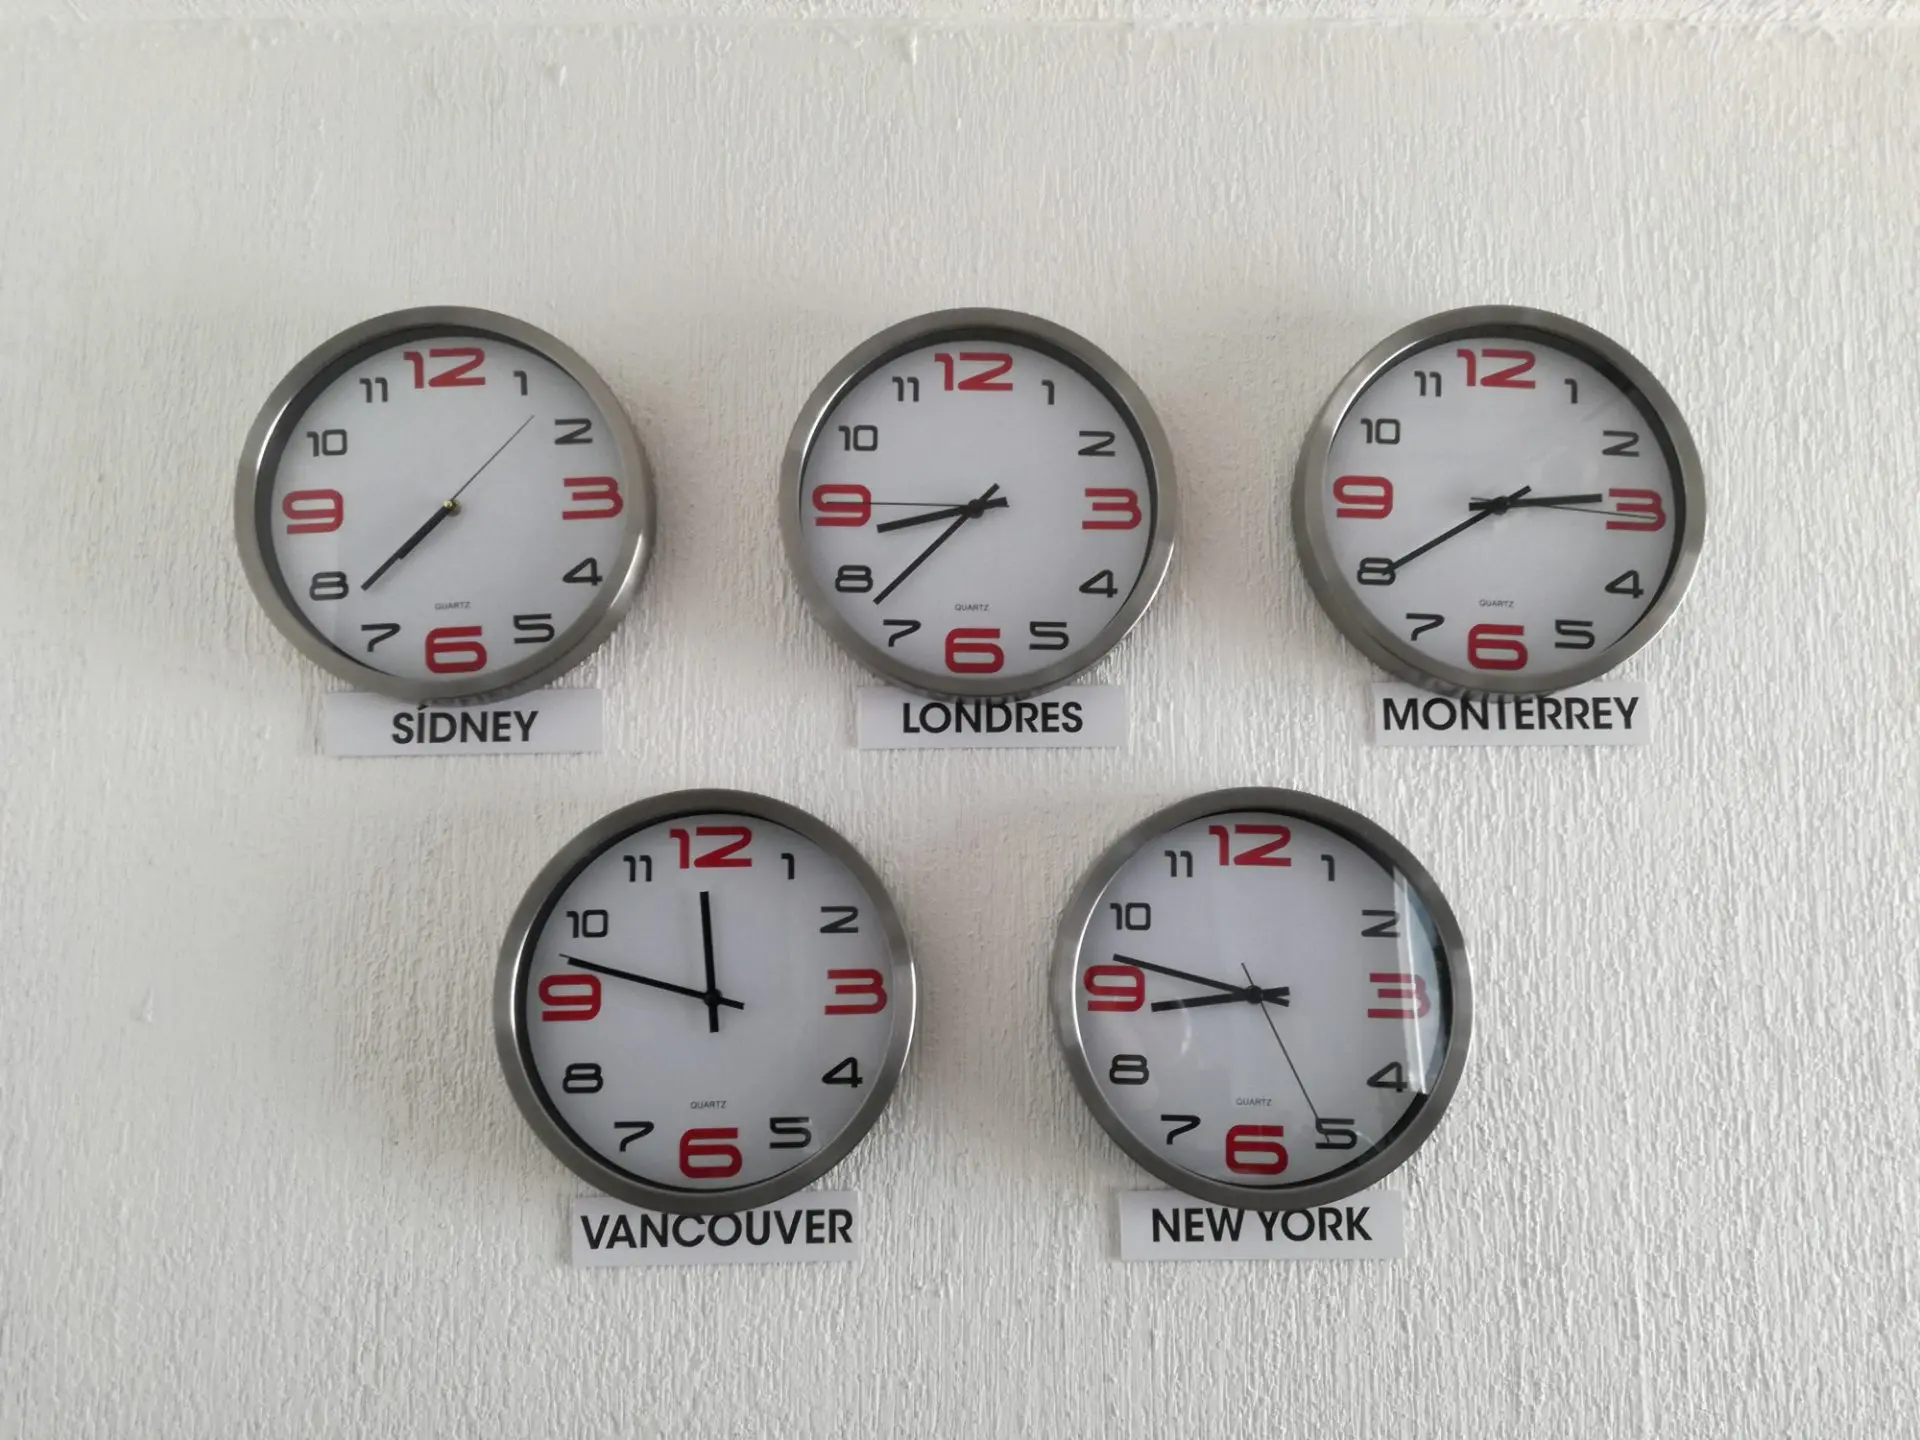 5 clocks representing different time zones